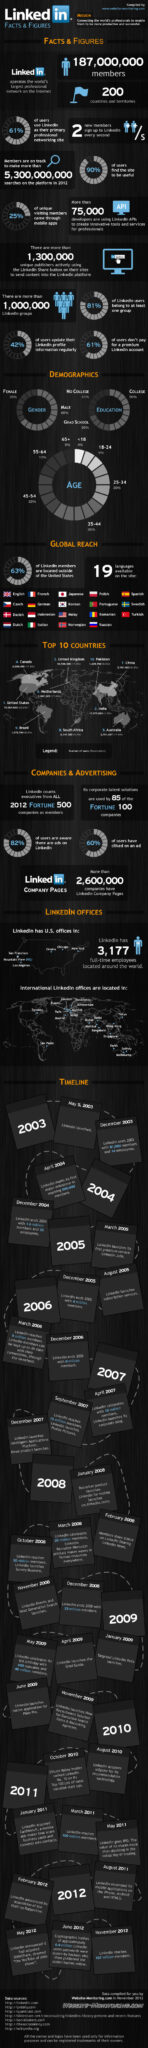 Jobs Across The World - LinkedIn